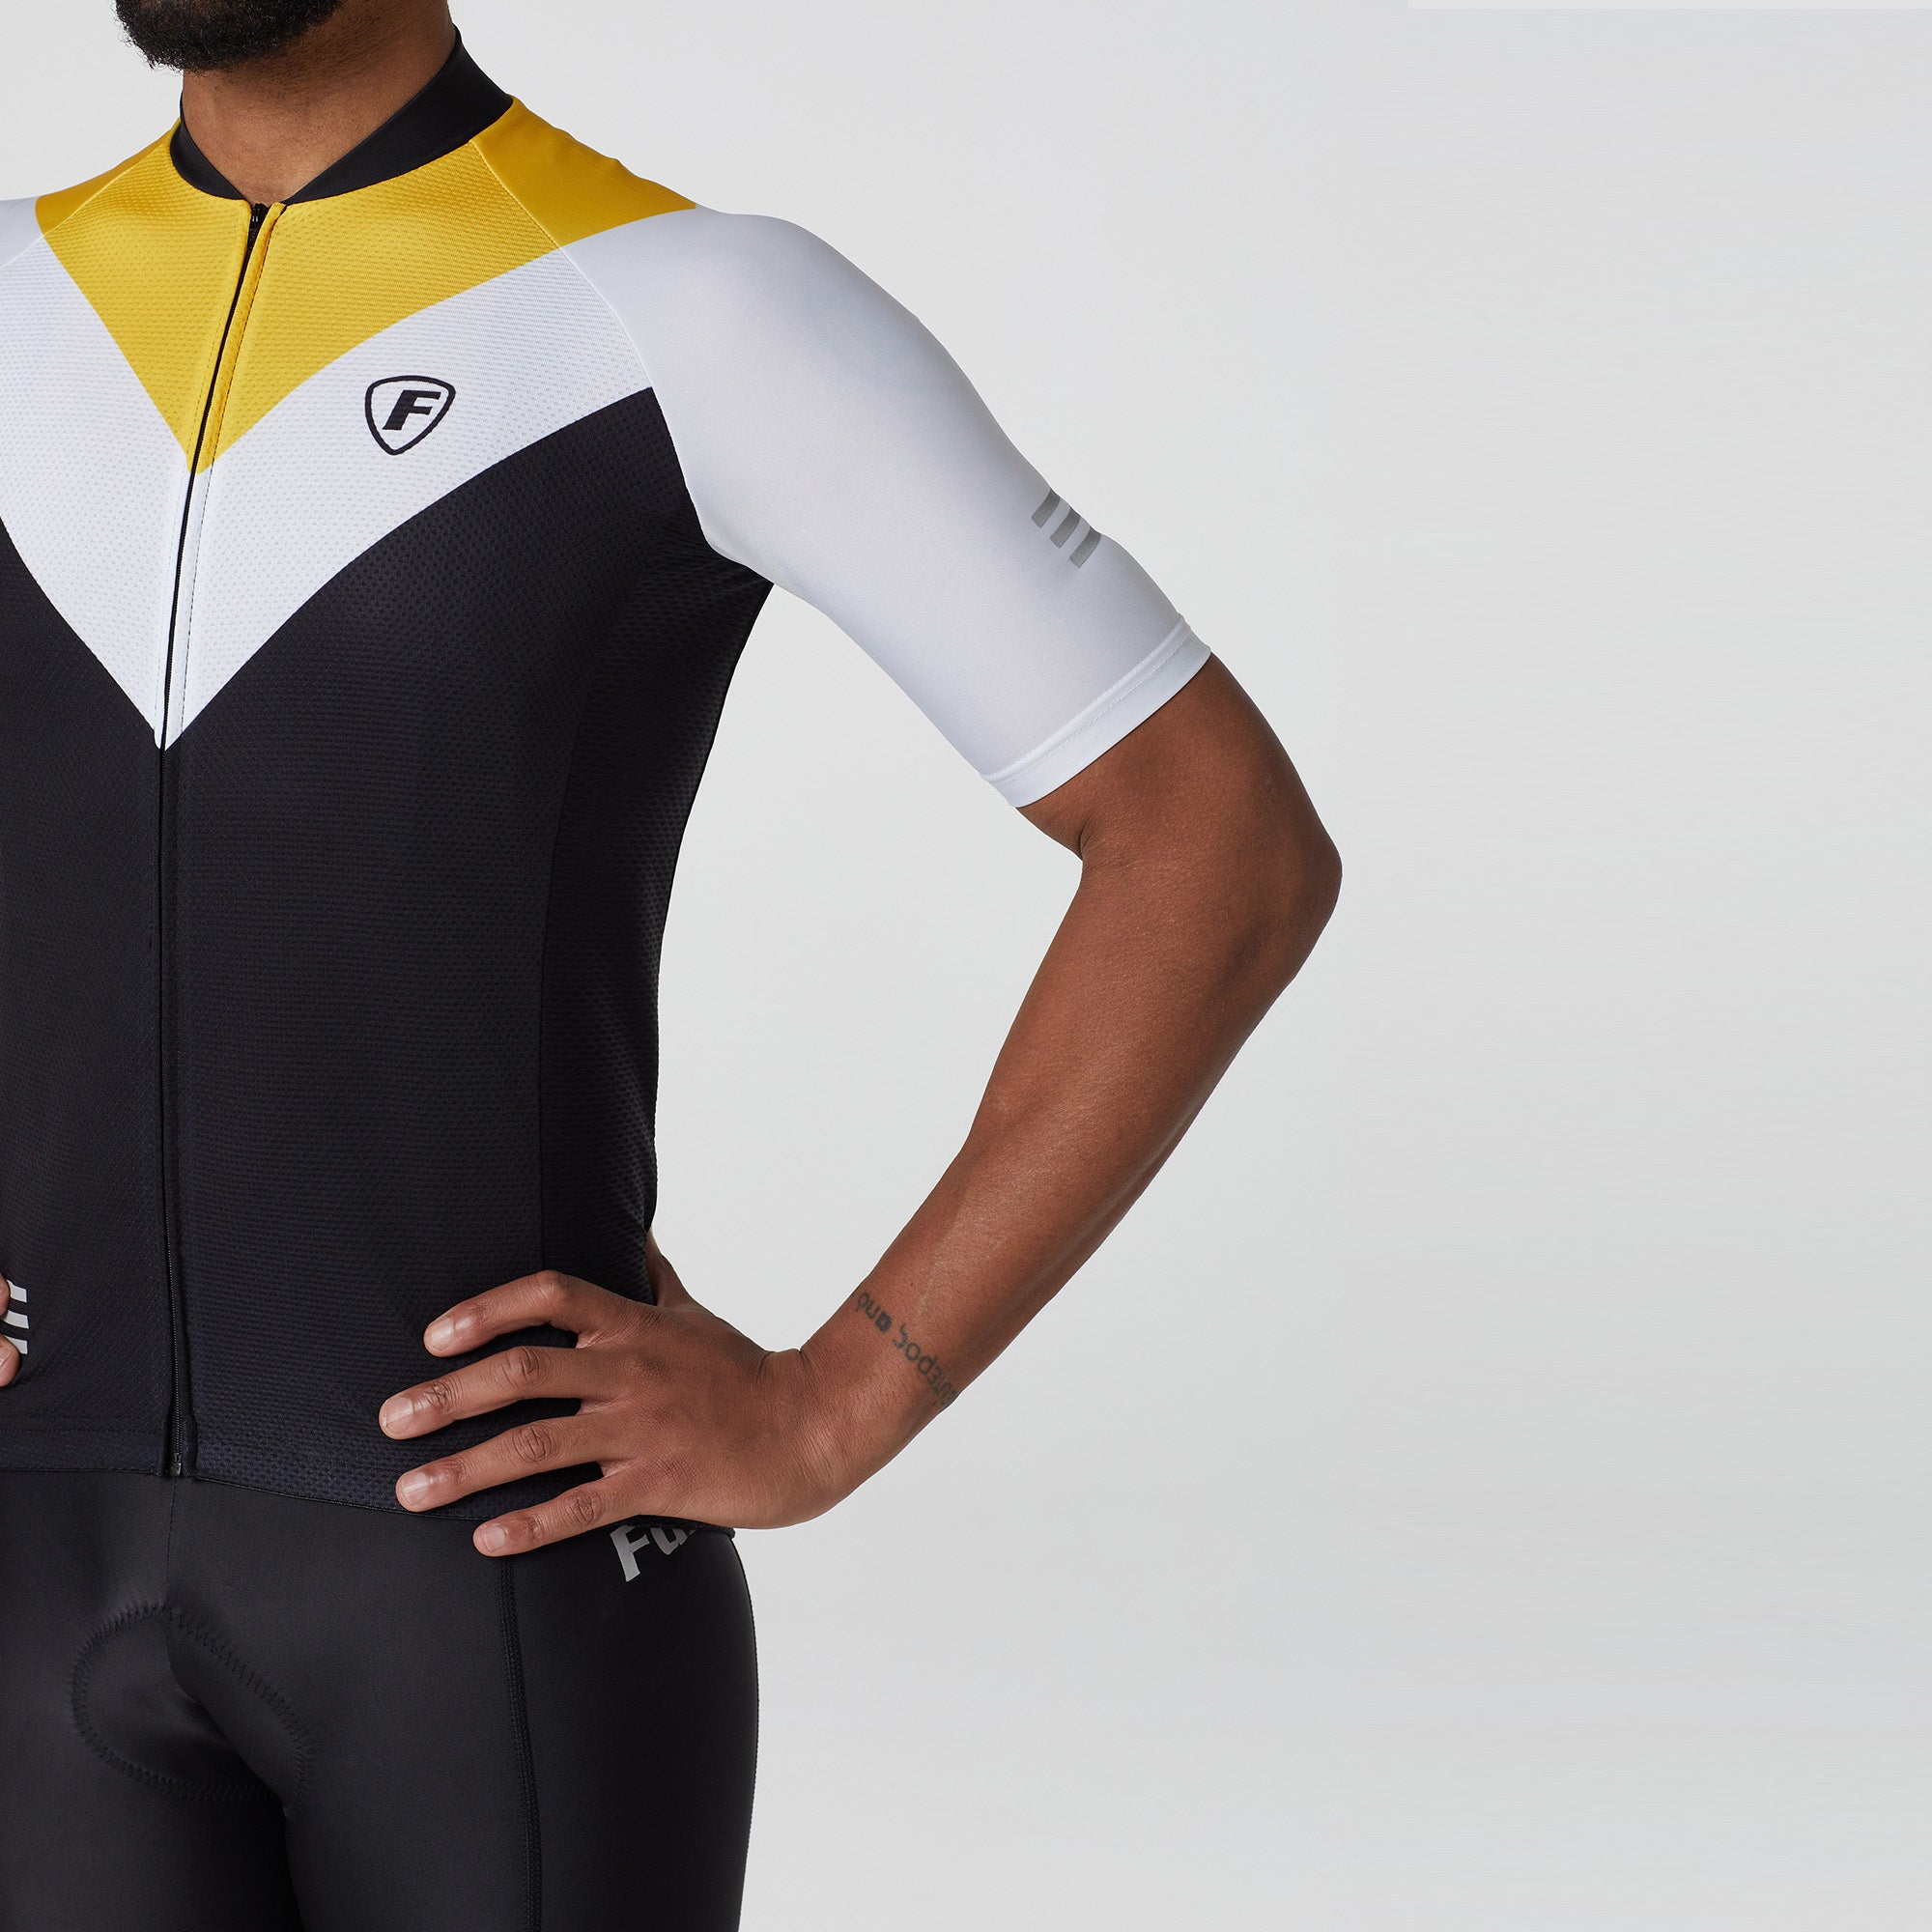 Fdx Mens Yellow & Black Short Sleeve Cycling Jersey & Gel Padded Bib Shorts Best Summer Road Bike Wear Light Weight, Hi-viz Reflectors & Pockets - Velos